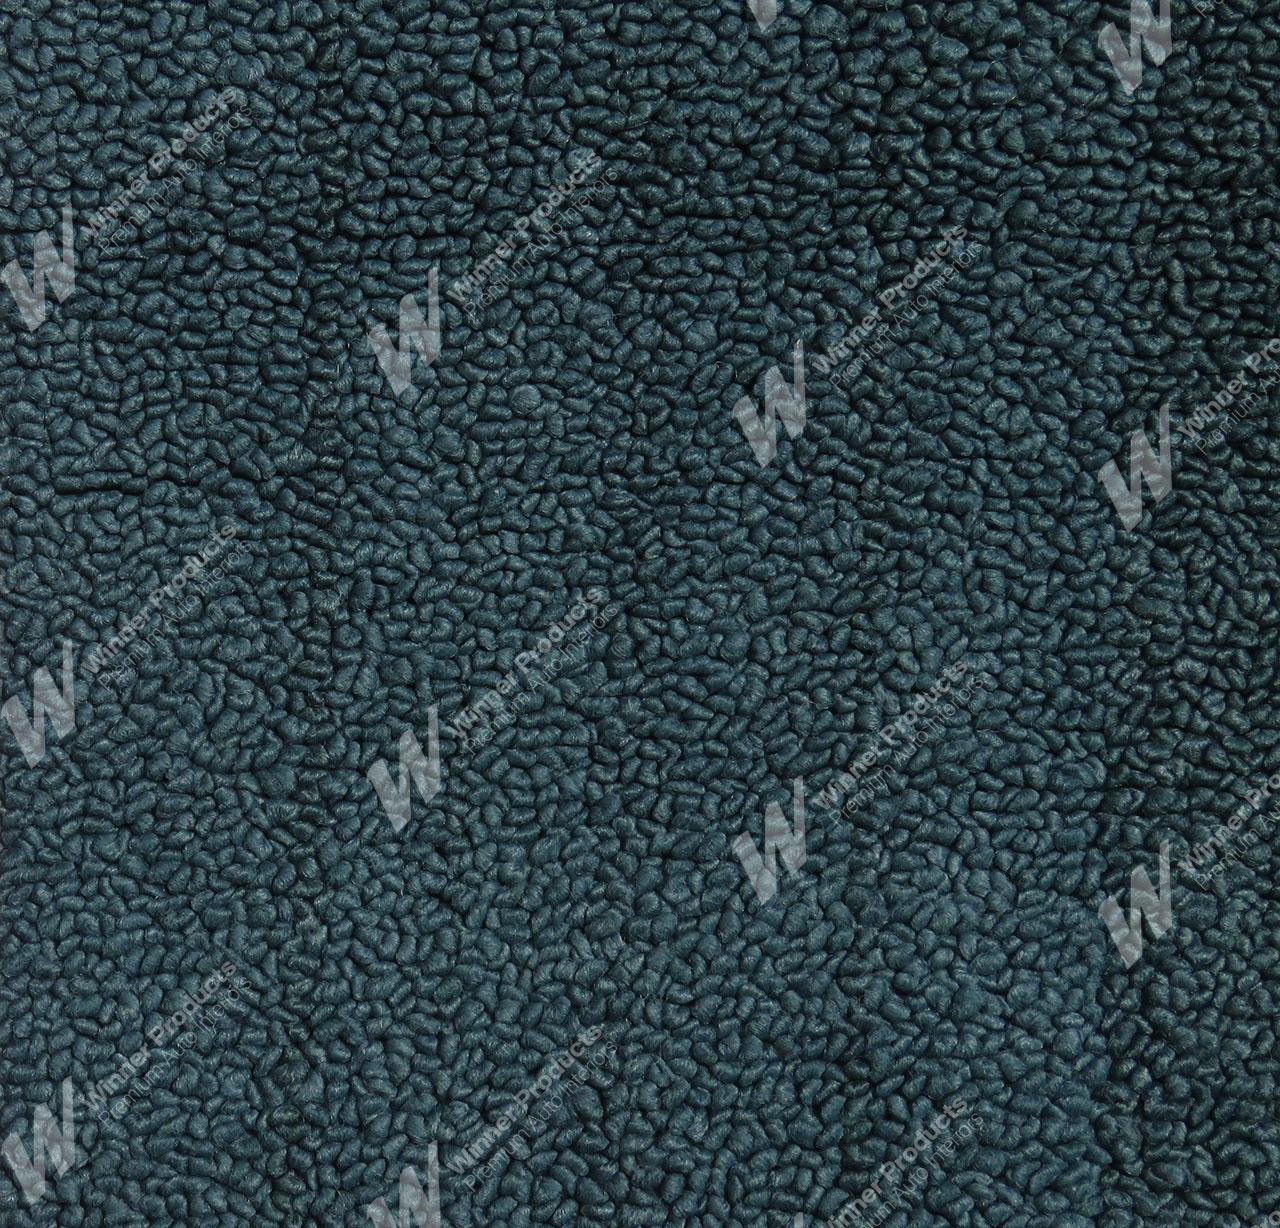 Holden Monaro HT Monaro GTS Coupe 13X Turquoise Mist Carpet (Image 1 of 1)